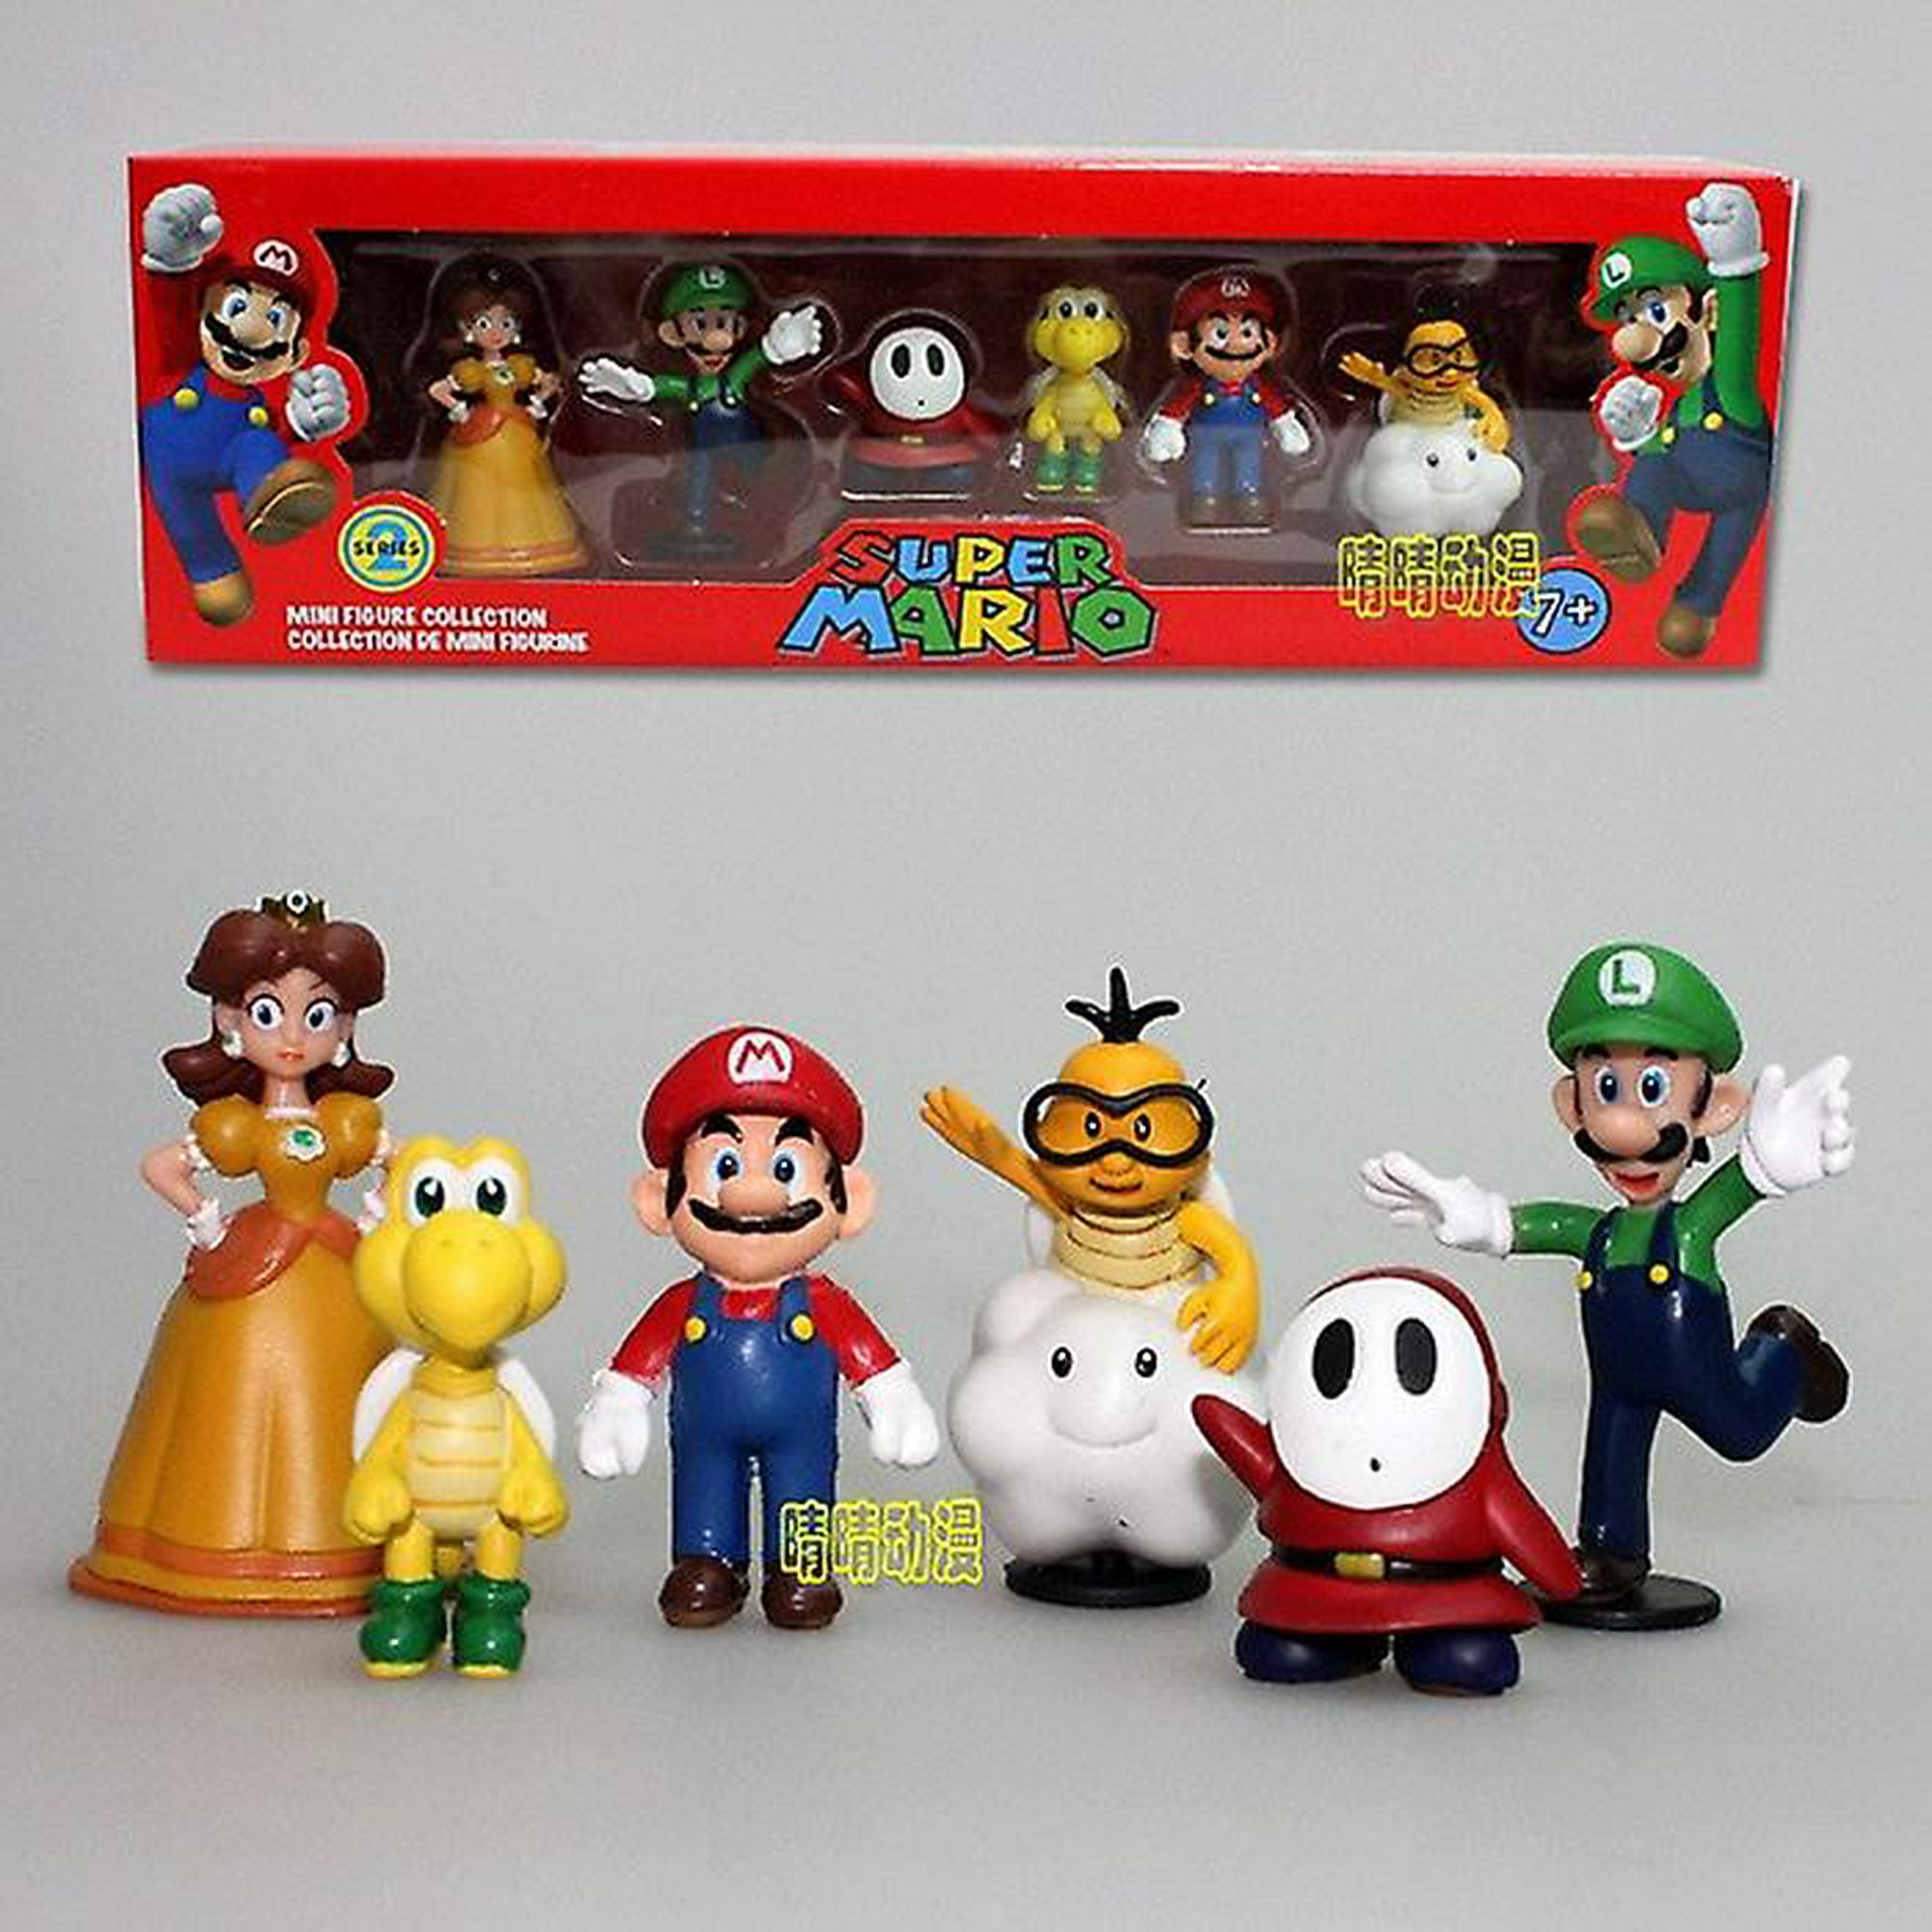 Juego de 6 figuras de acción de Mario Toys, colección de figuras de Mario  Brothers, 3.9 a 5.9 pulgadas de alto